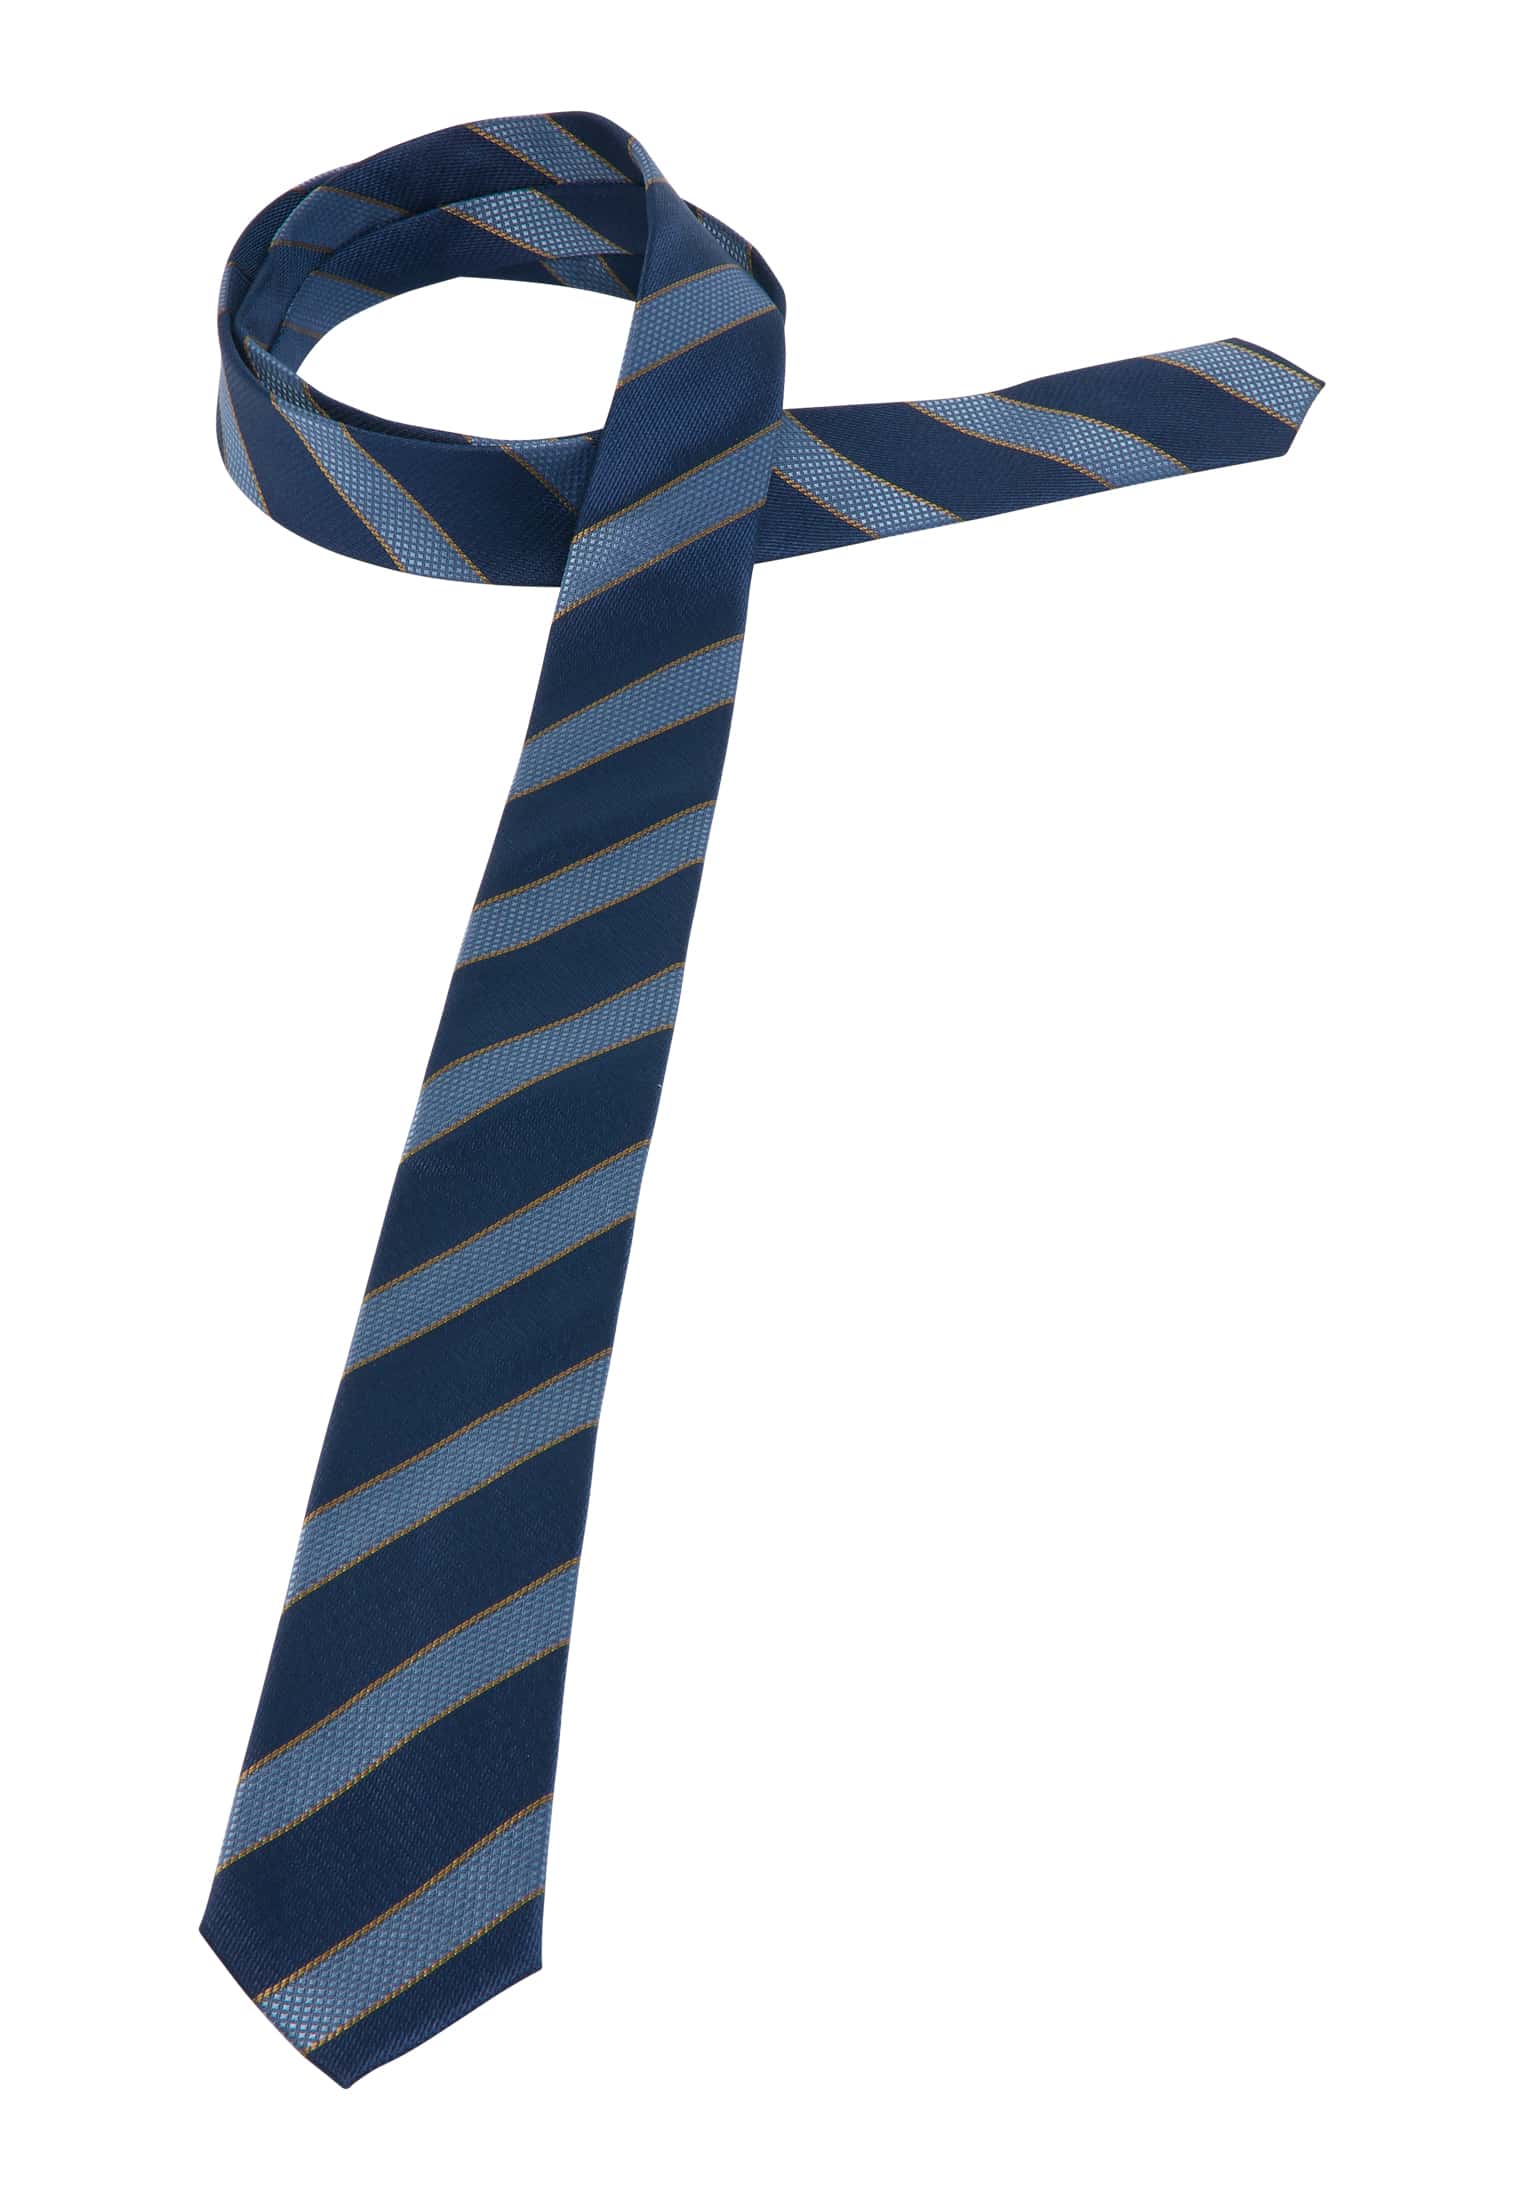 dunkelblau | Krawatte | 142 1AC01898-01-81-142 gestreift dunkelblau | in